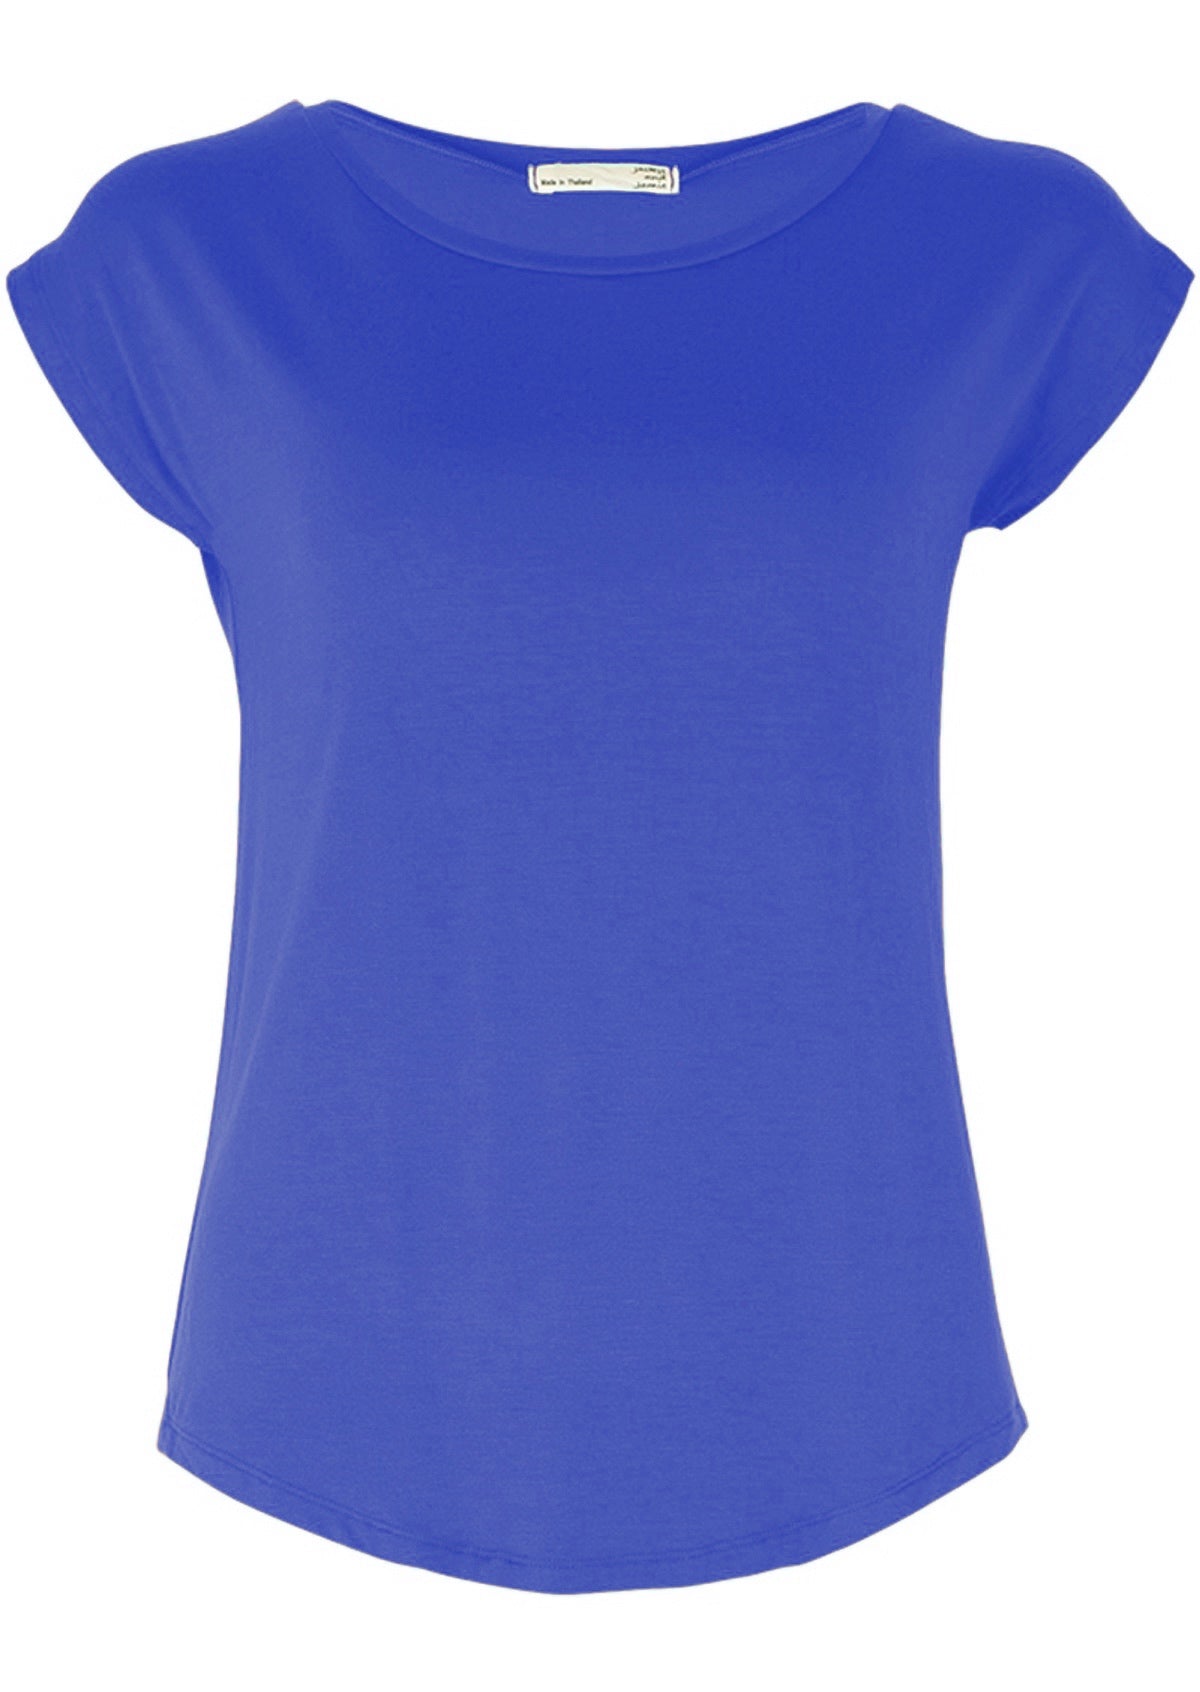 Women's soft blue rayon jersey t-shirt.